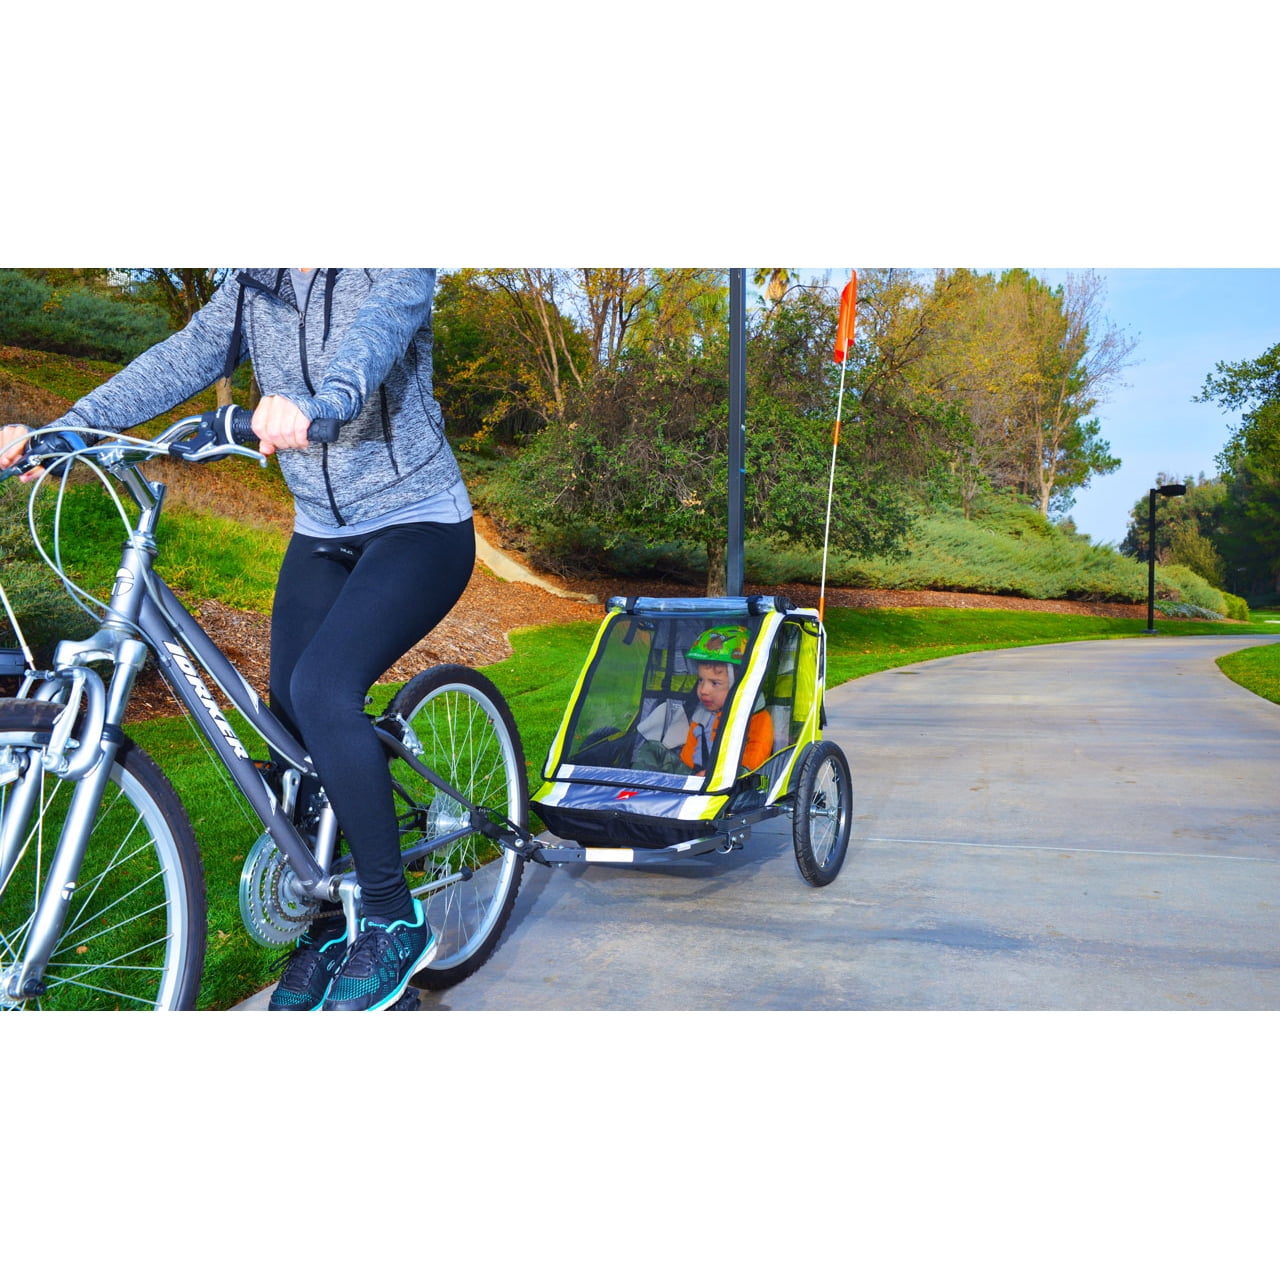 Allen Sports T2-G Deluxe 2-Child Bike Trailer Green for sale online